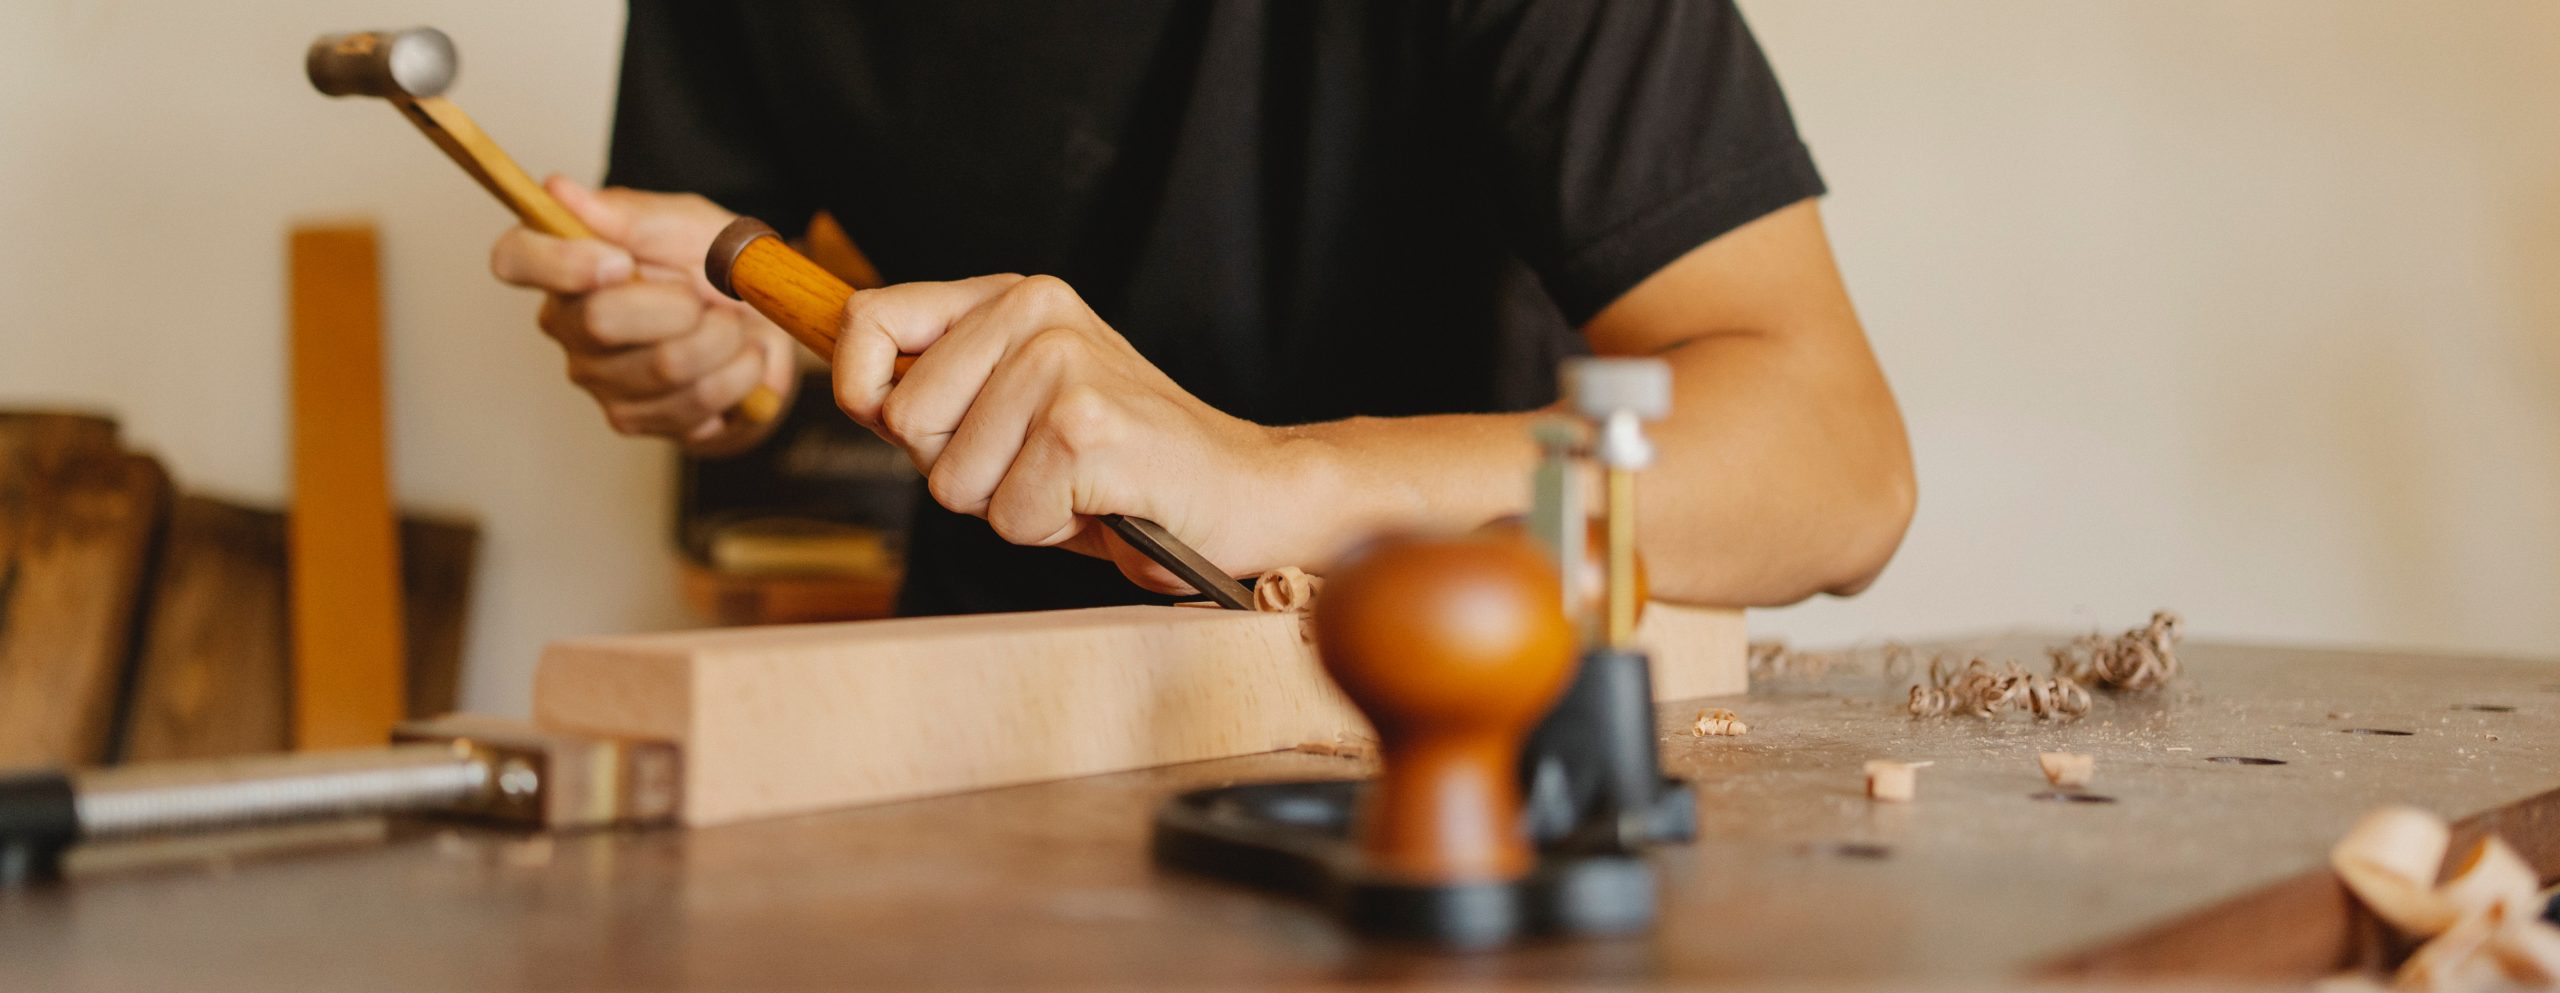 Best Wood Chisel Set - UK Buyer’s Guide